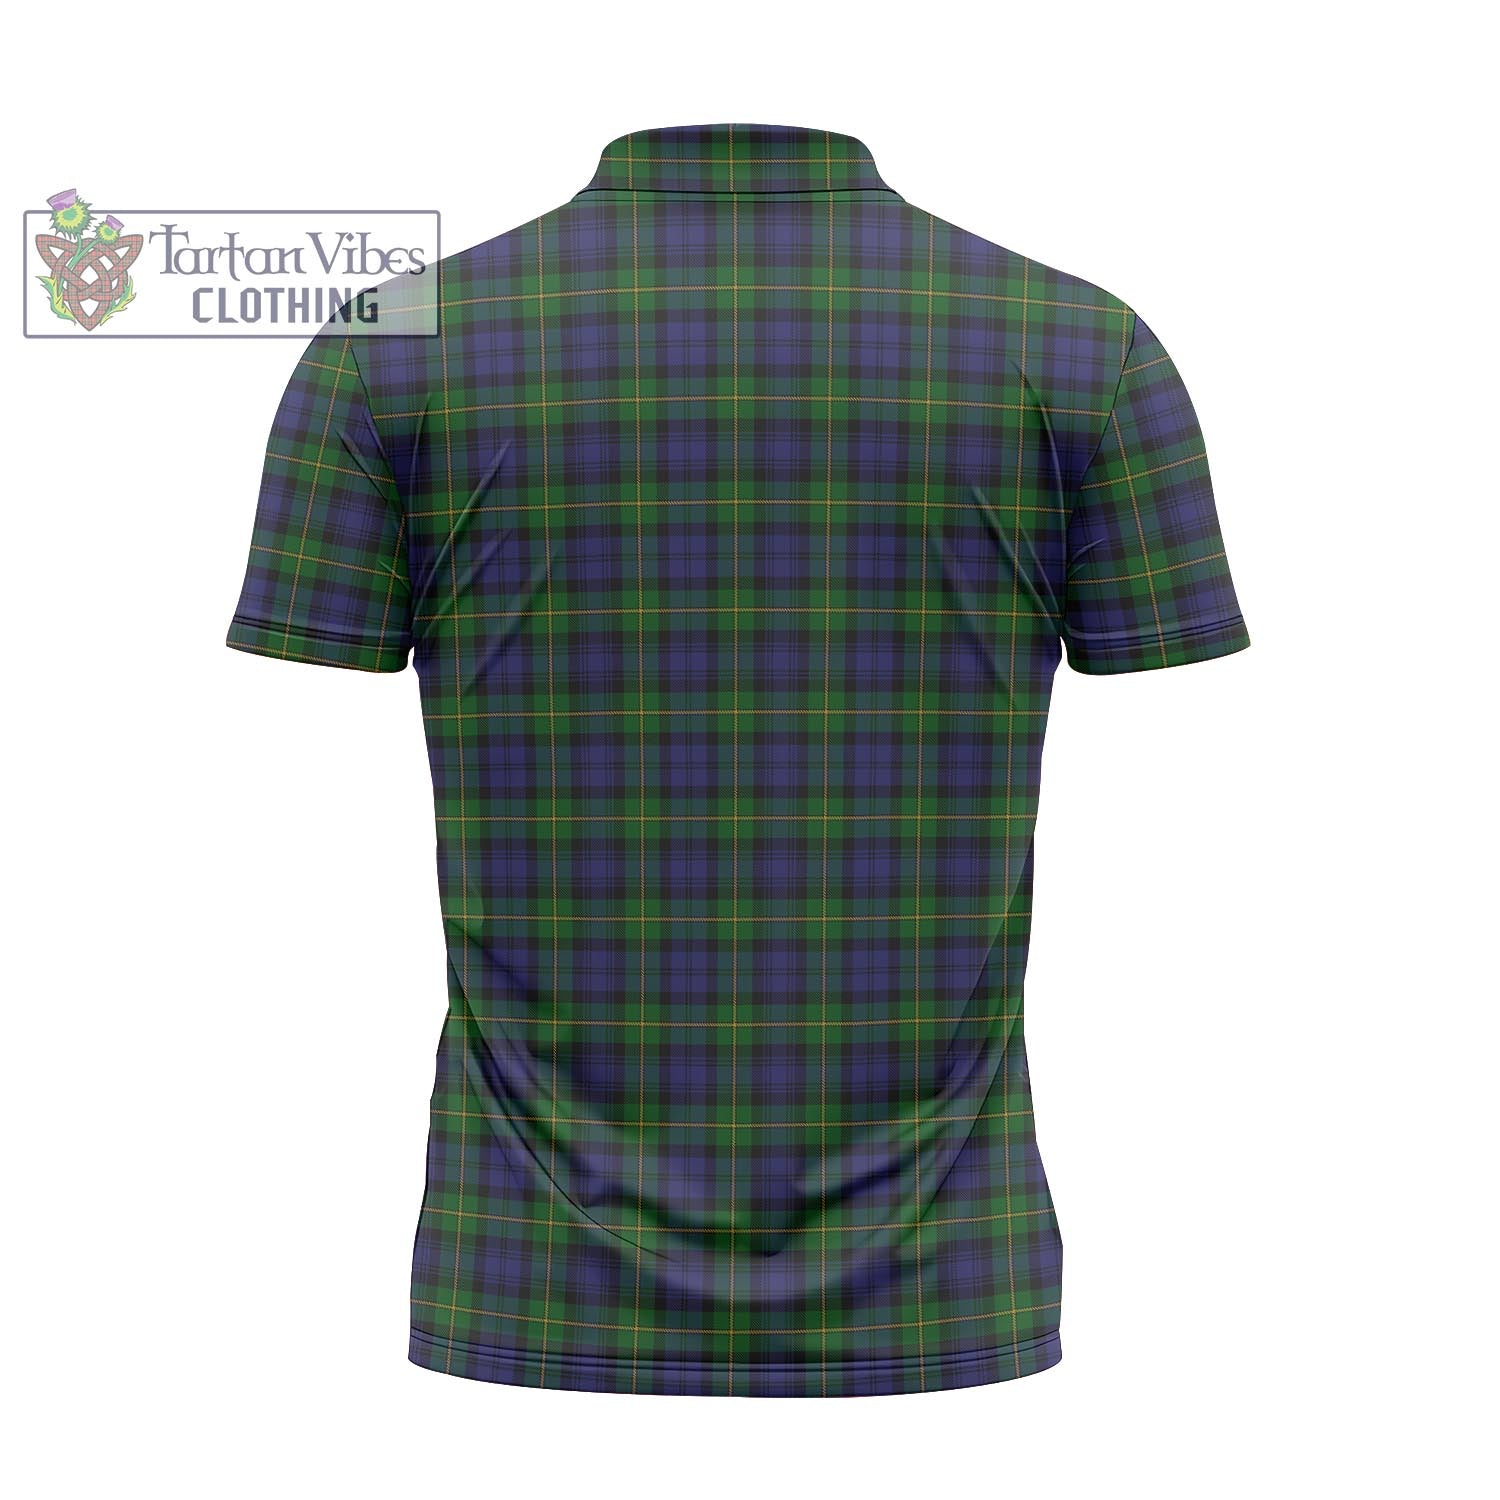 Tartan Vibes Clothing Gordon Tartan Zipper Polo Shirt with Family Crest